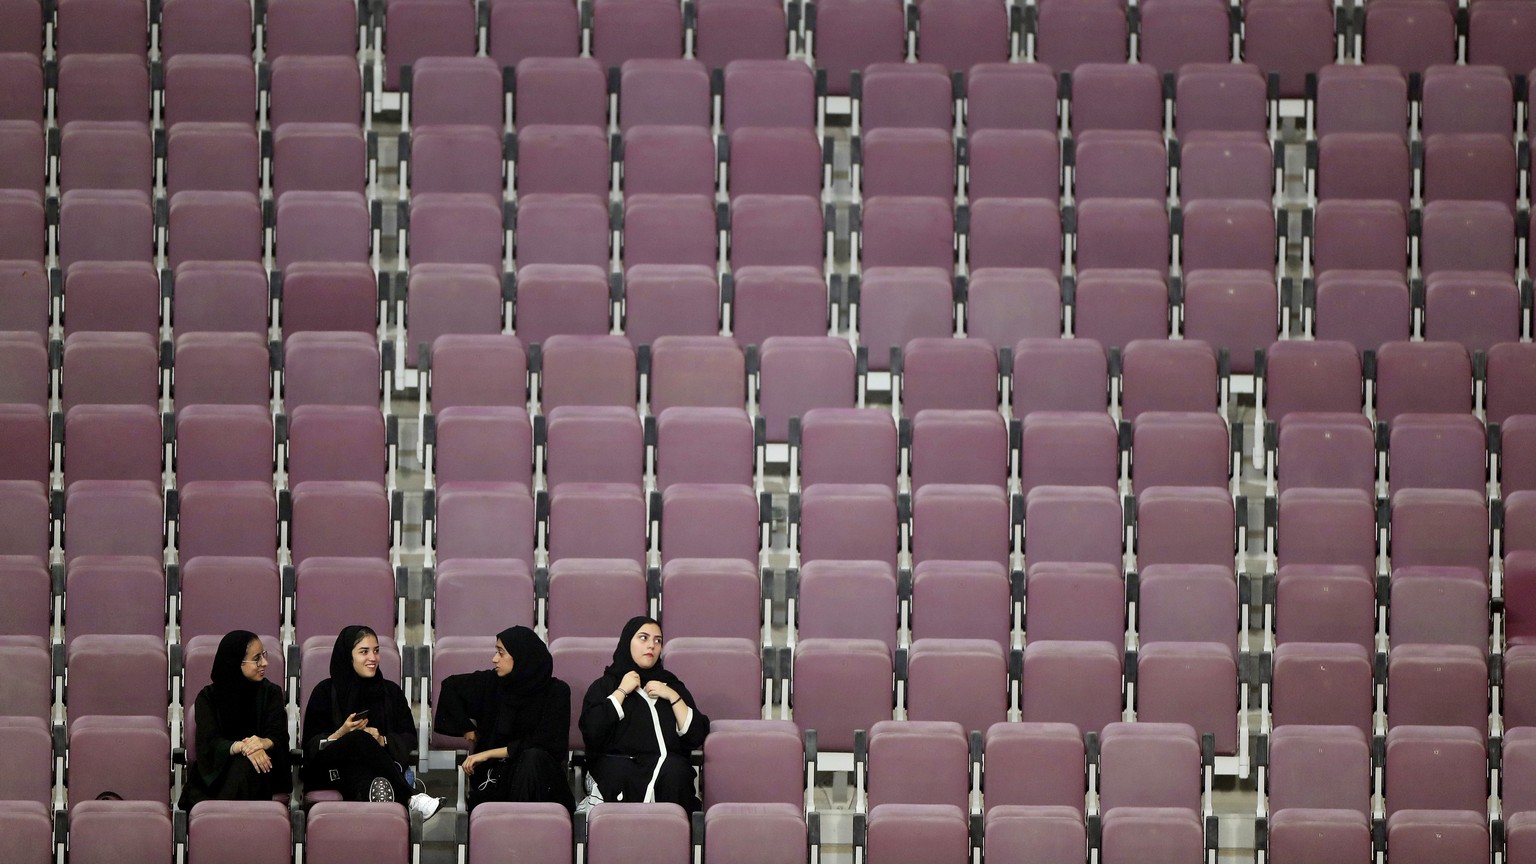 Spectators sit in nearly empty seats the World Athletics Championships in Doha, Qatar, Monday, Sept. 30, 2019. (AP Photo/Hassan Ammar)